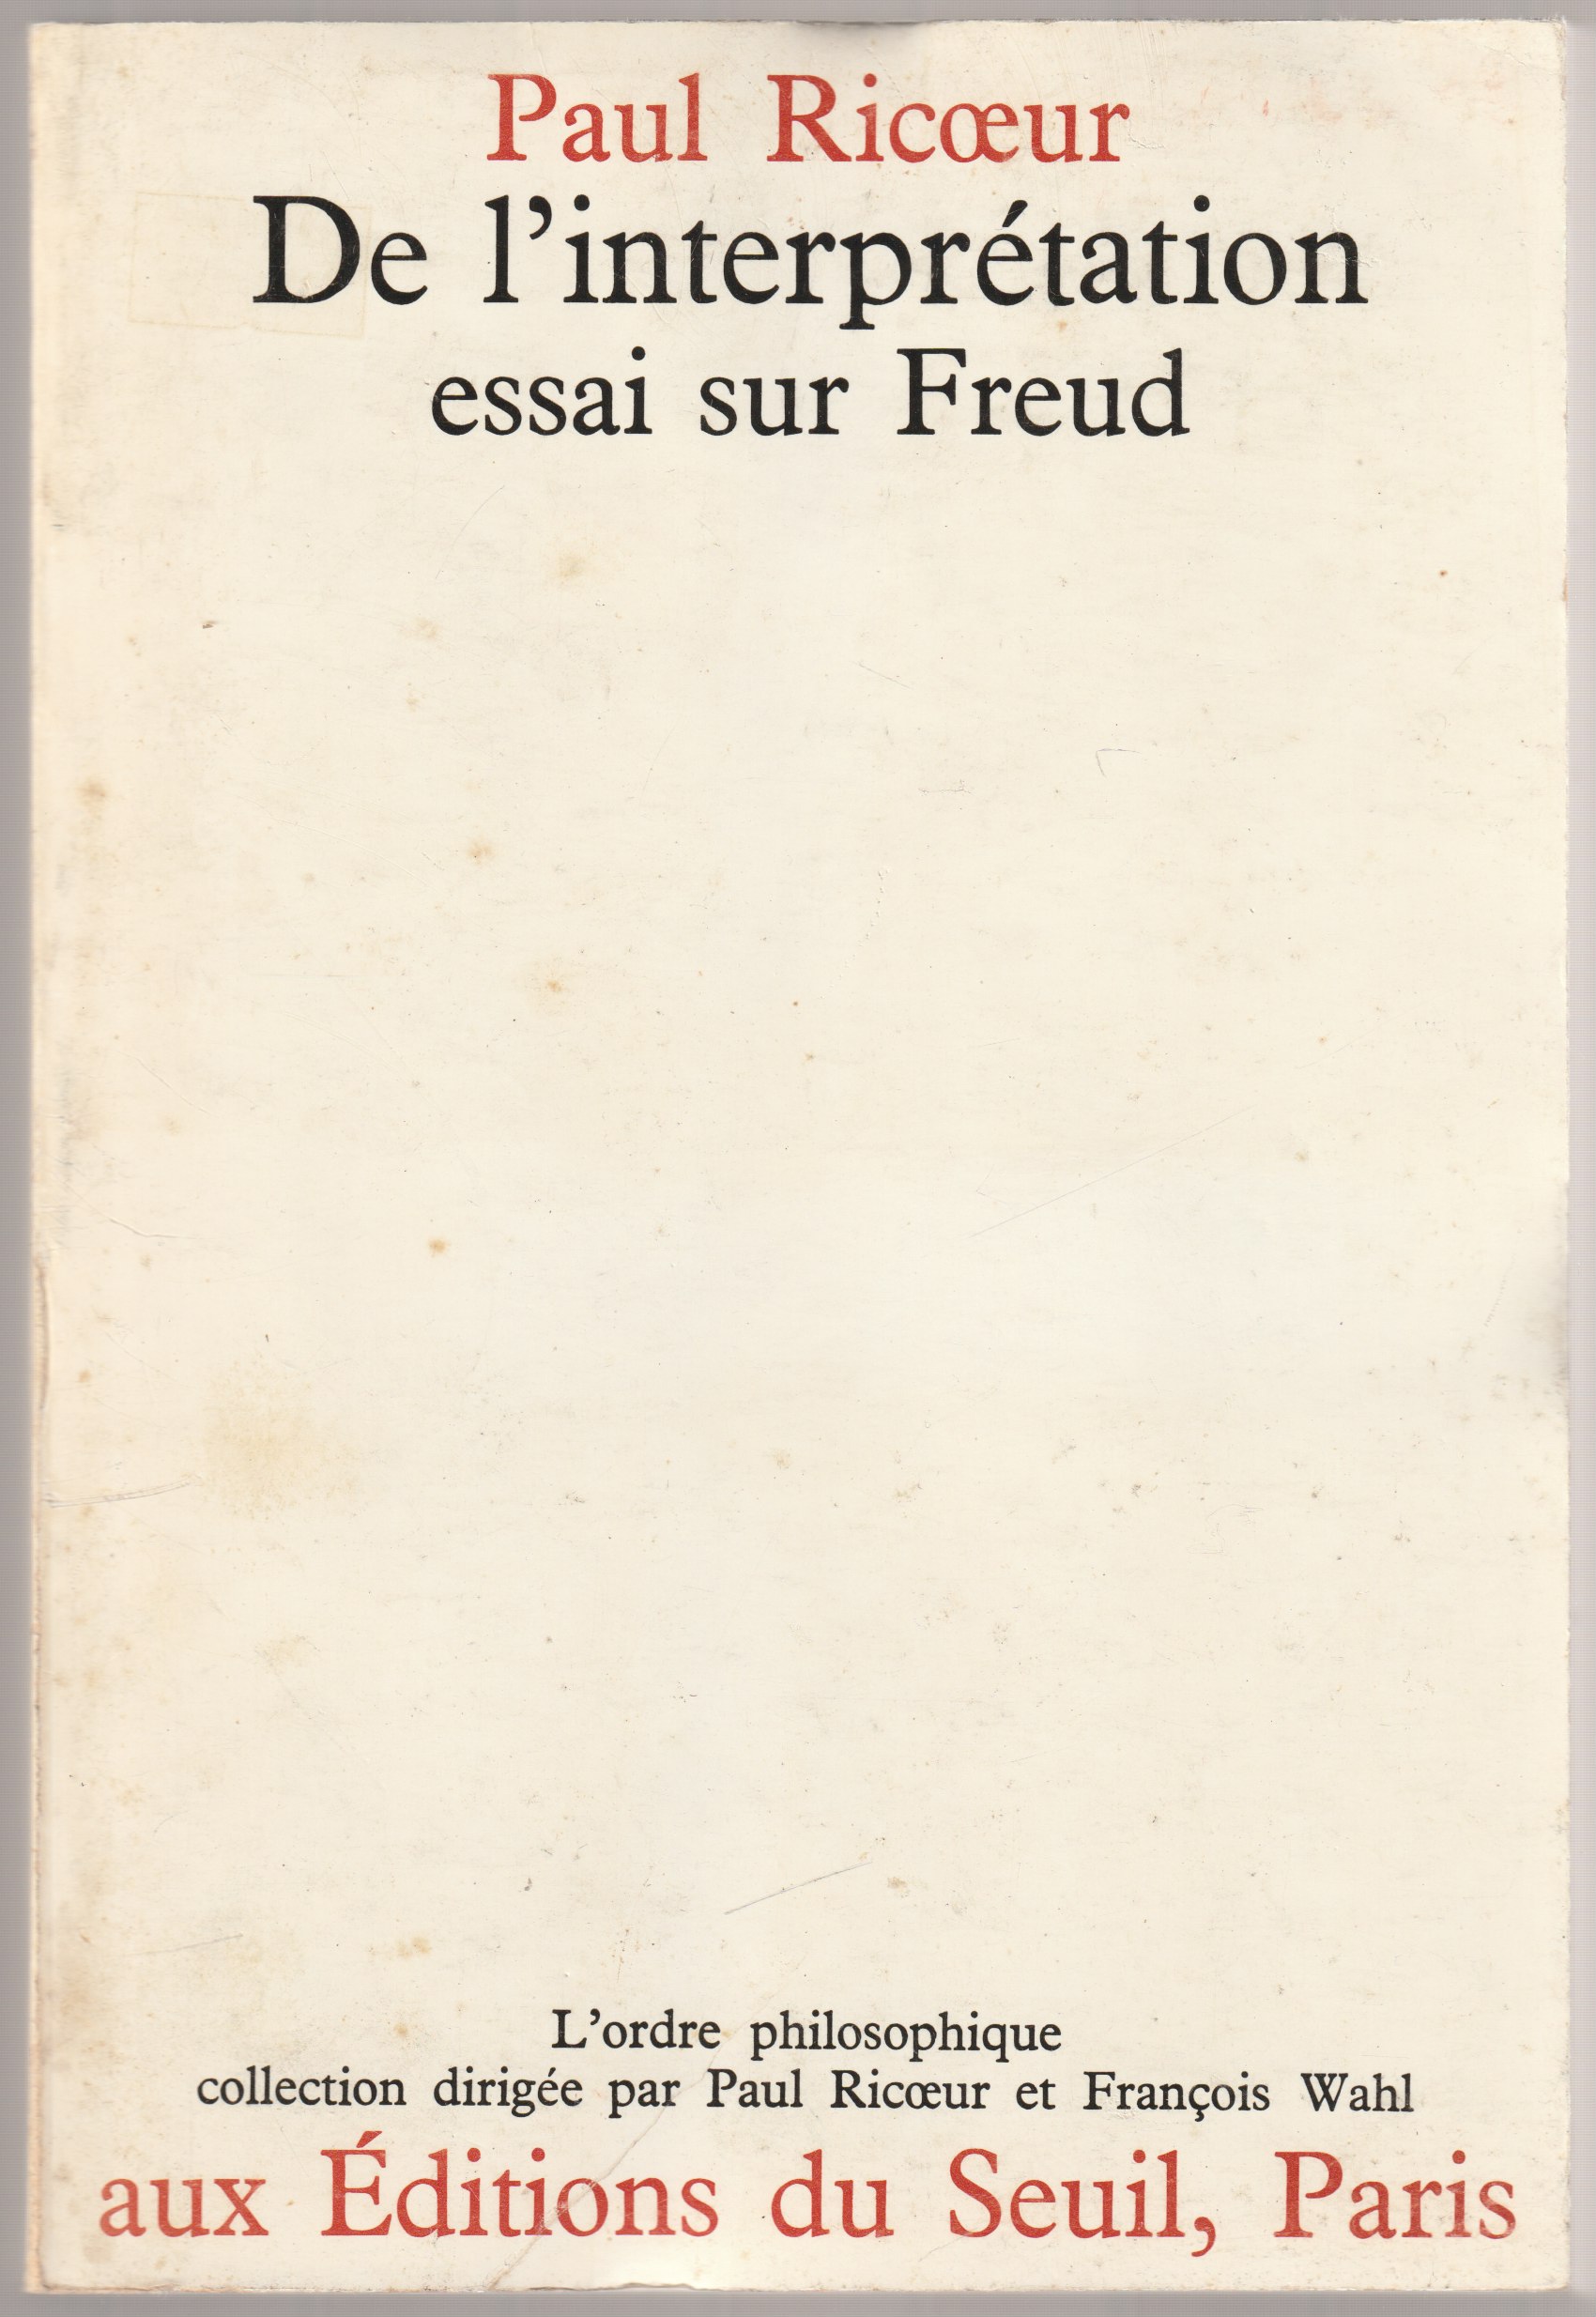 De l'interpretation : essai sur Freud.